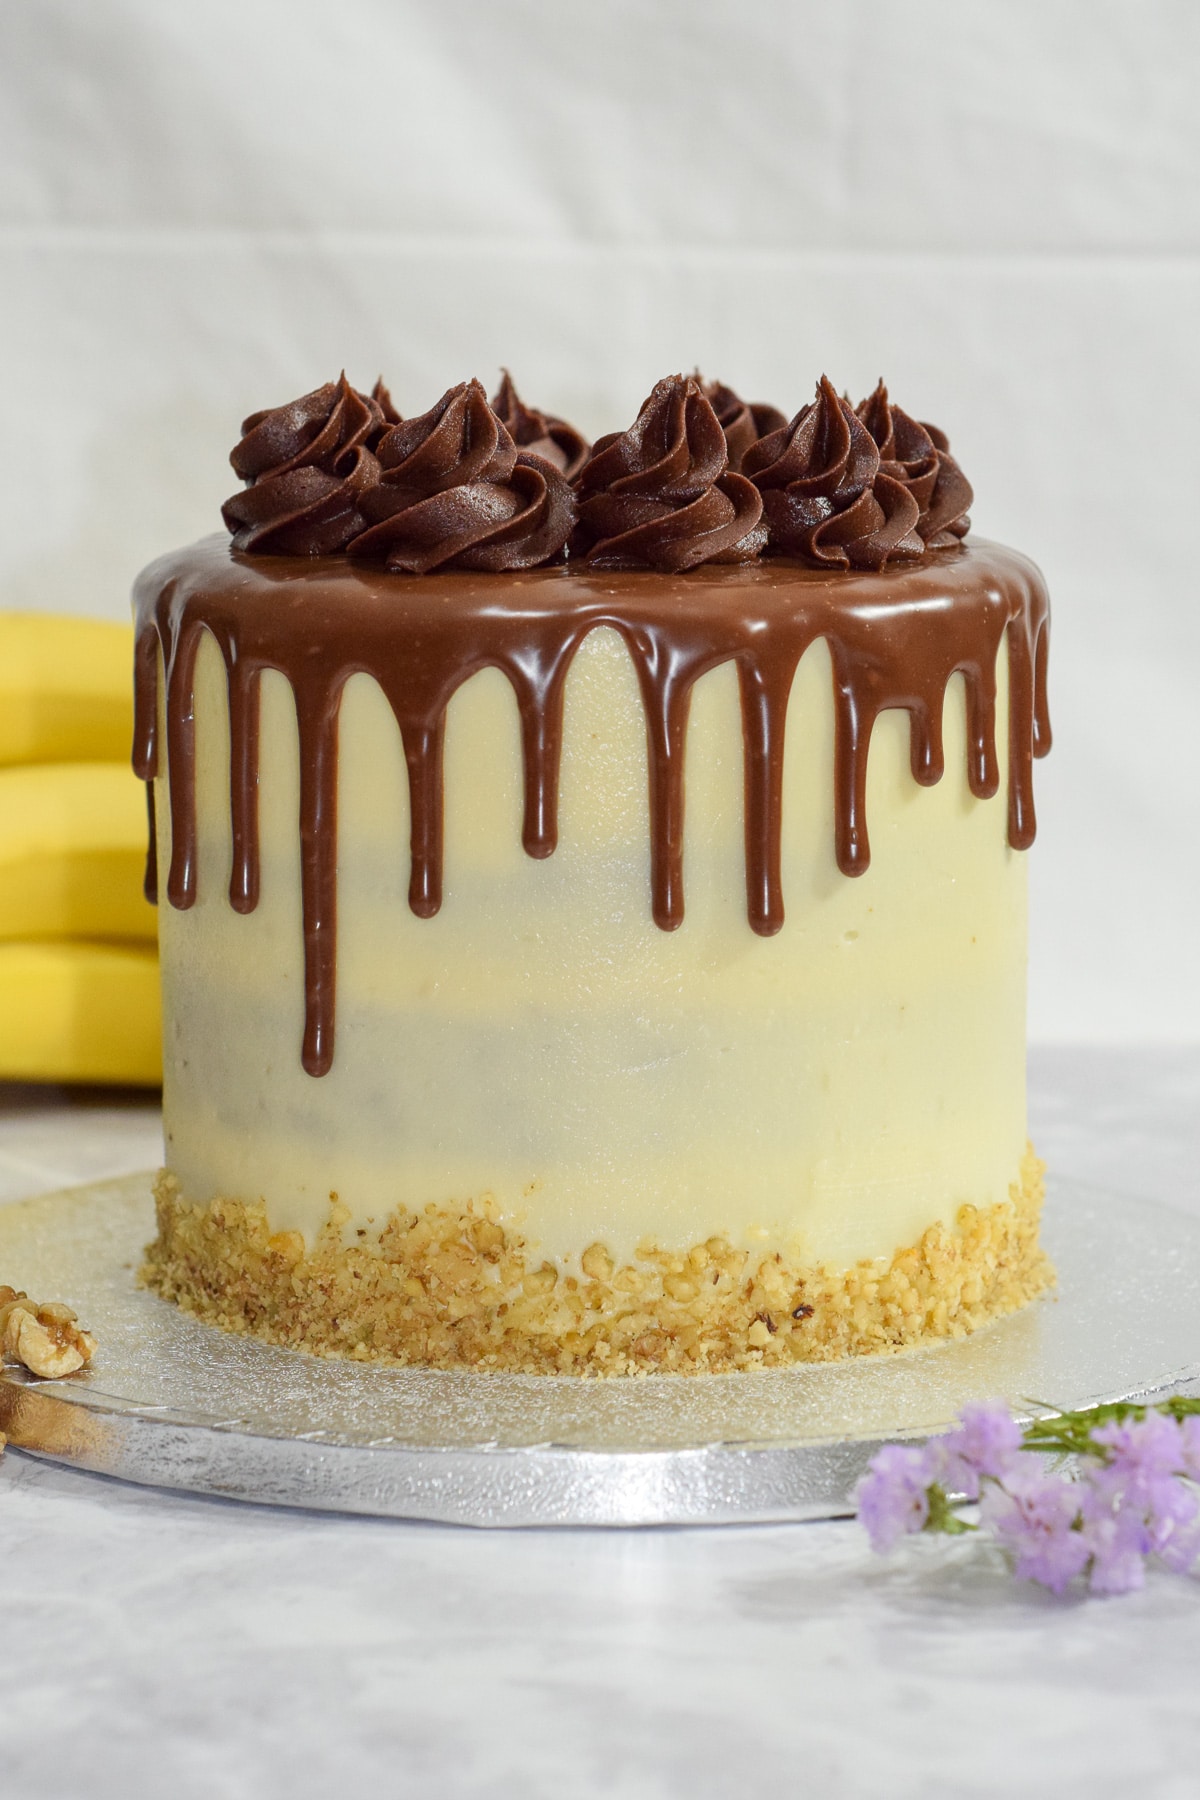 Banana walnut cake with vanilla cream cheese frosting and a milk chocolate ganache drip - whole cake